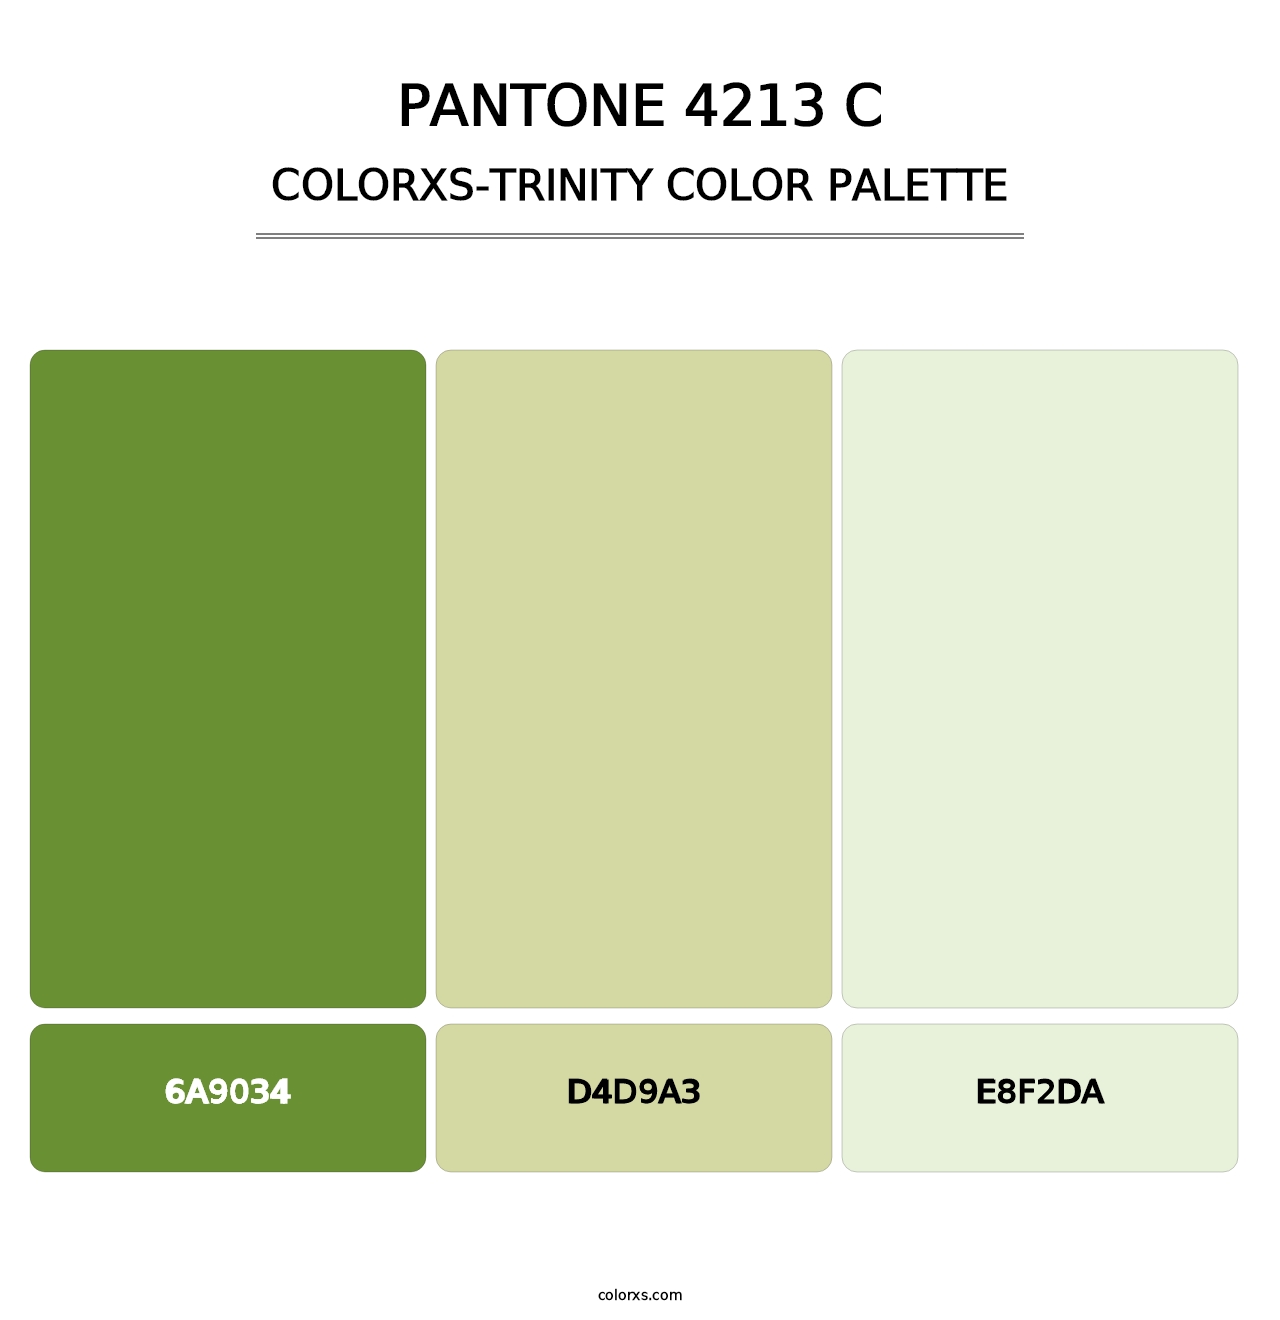 PANTONE 4213 C - Colorxs Trinity Palette